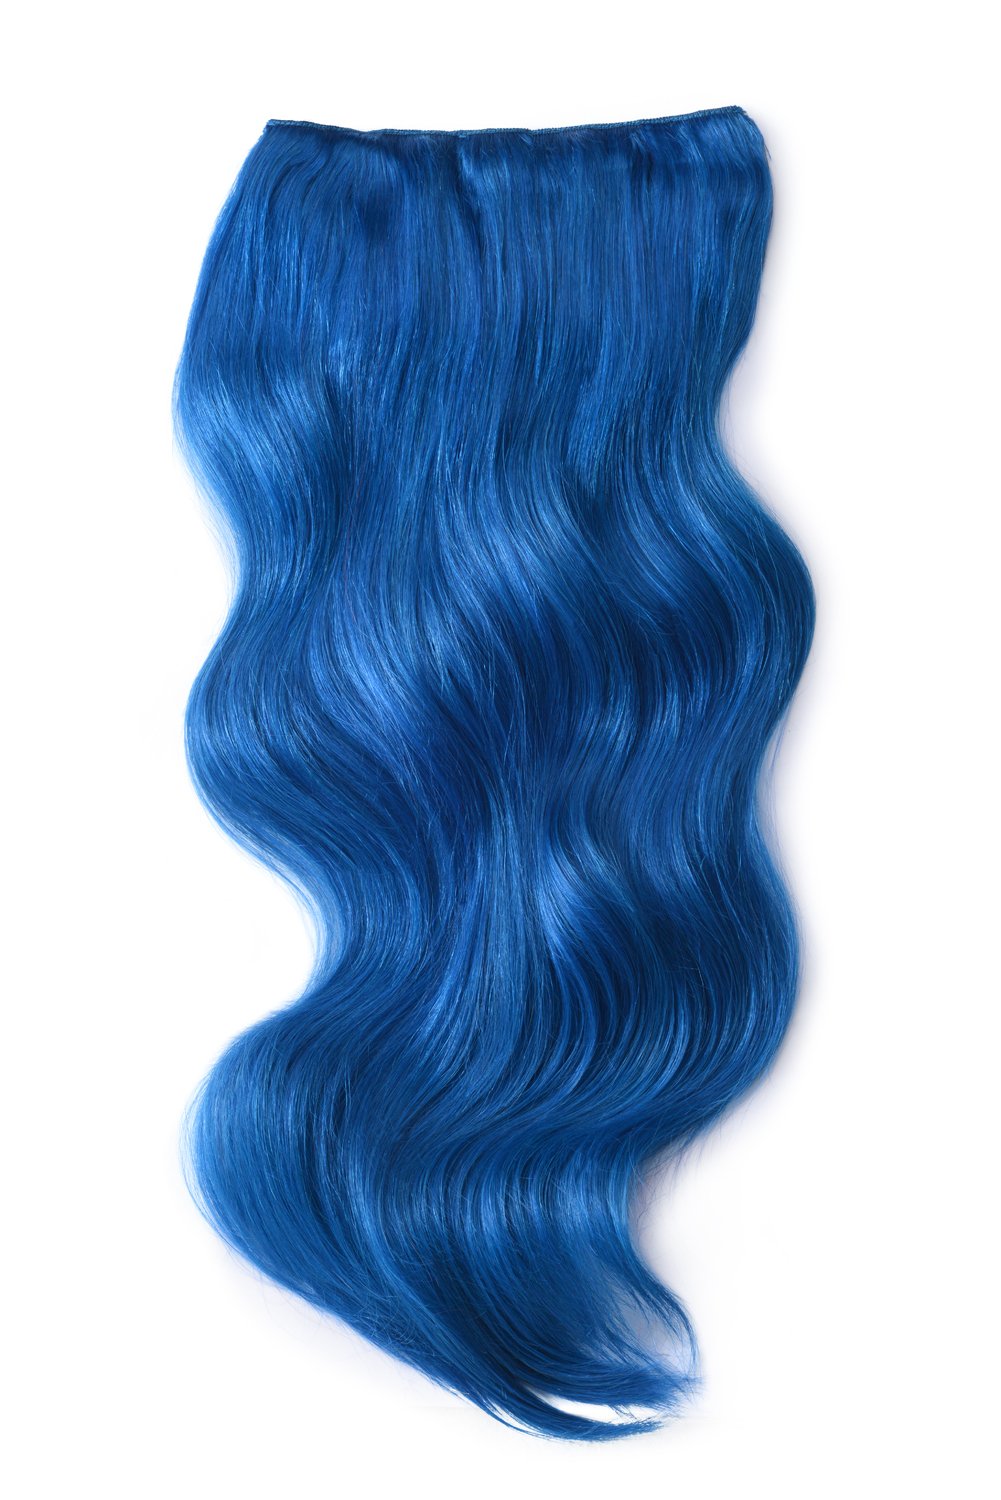 blue human hair extensions